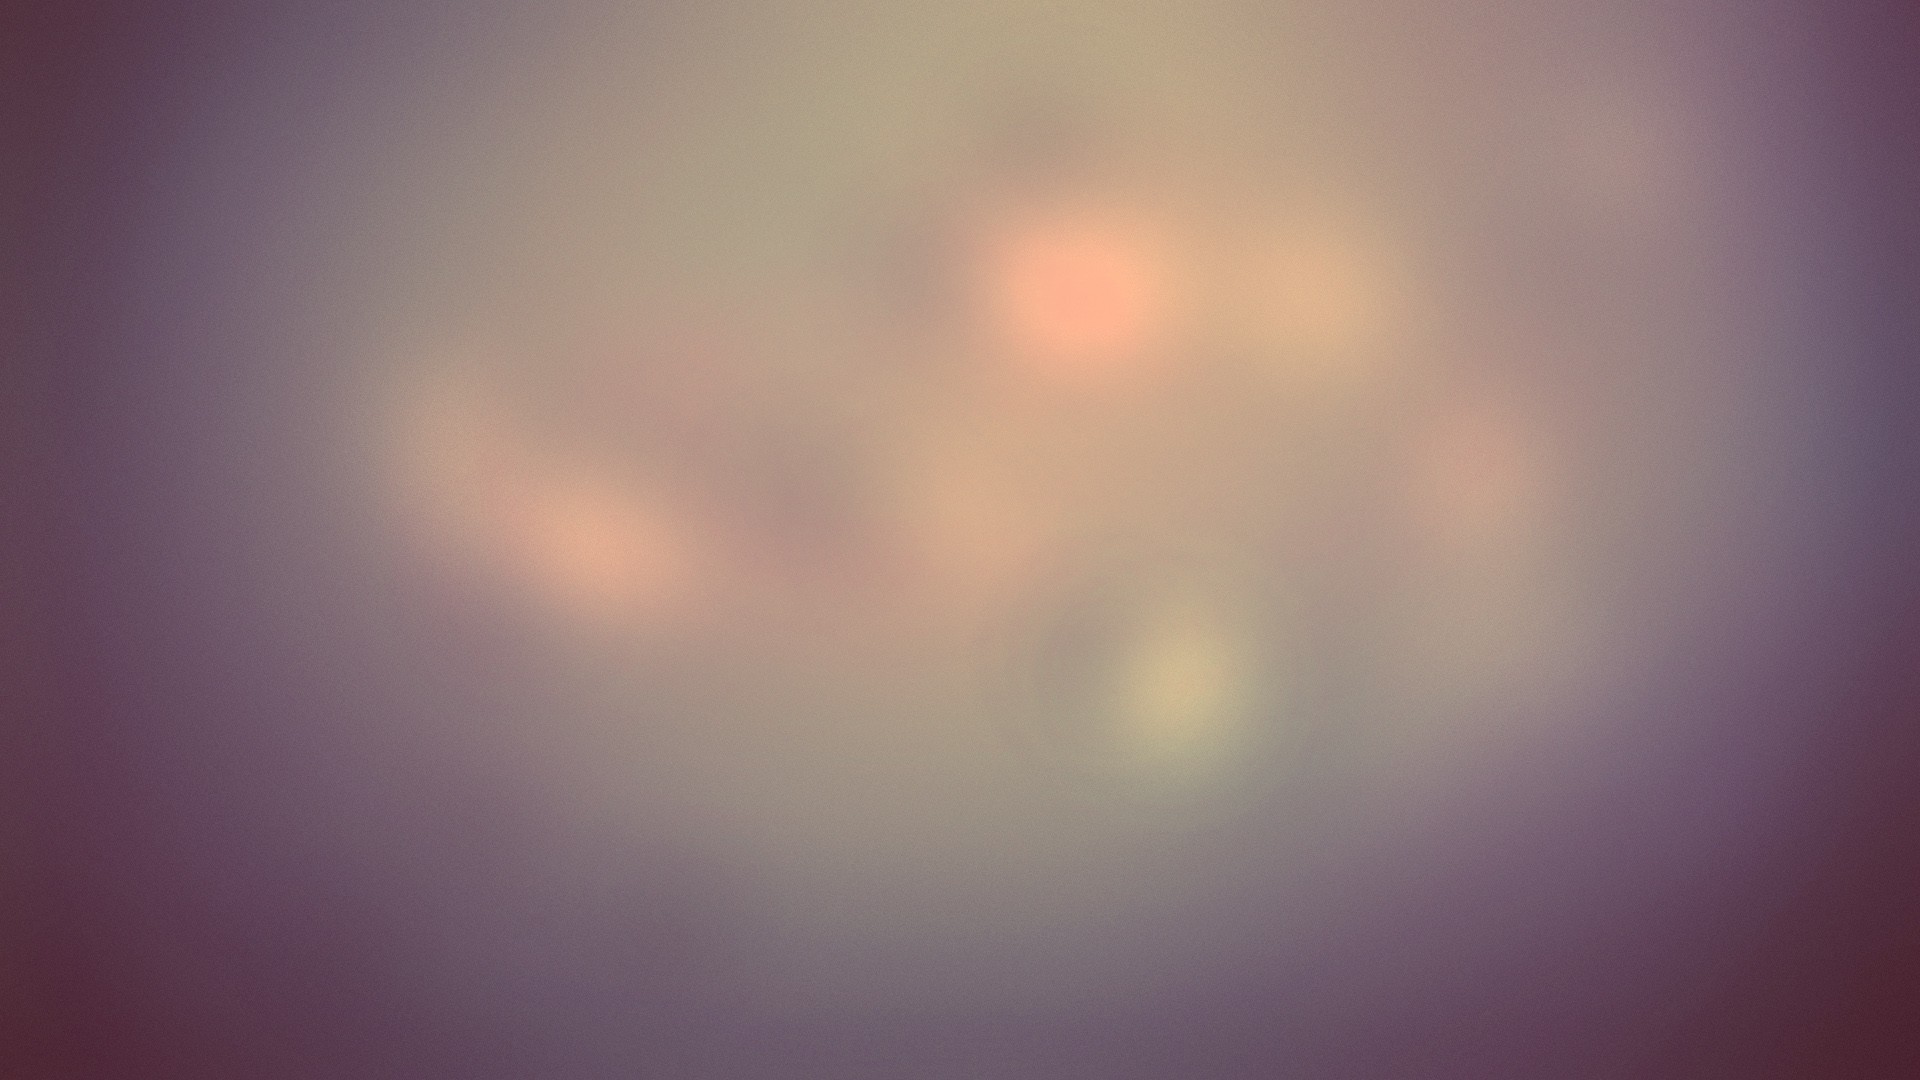 General 1920x1080 minimalism gradient simple background blurred